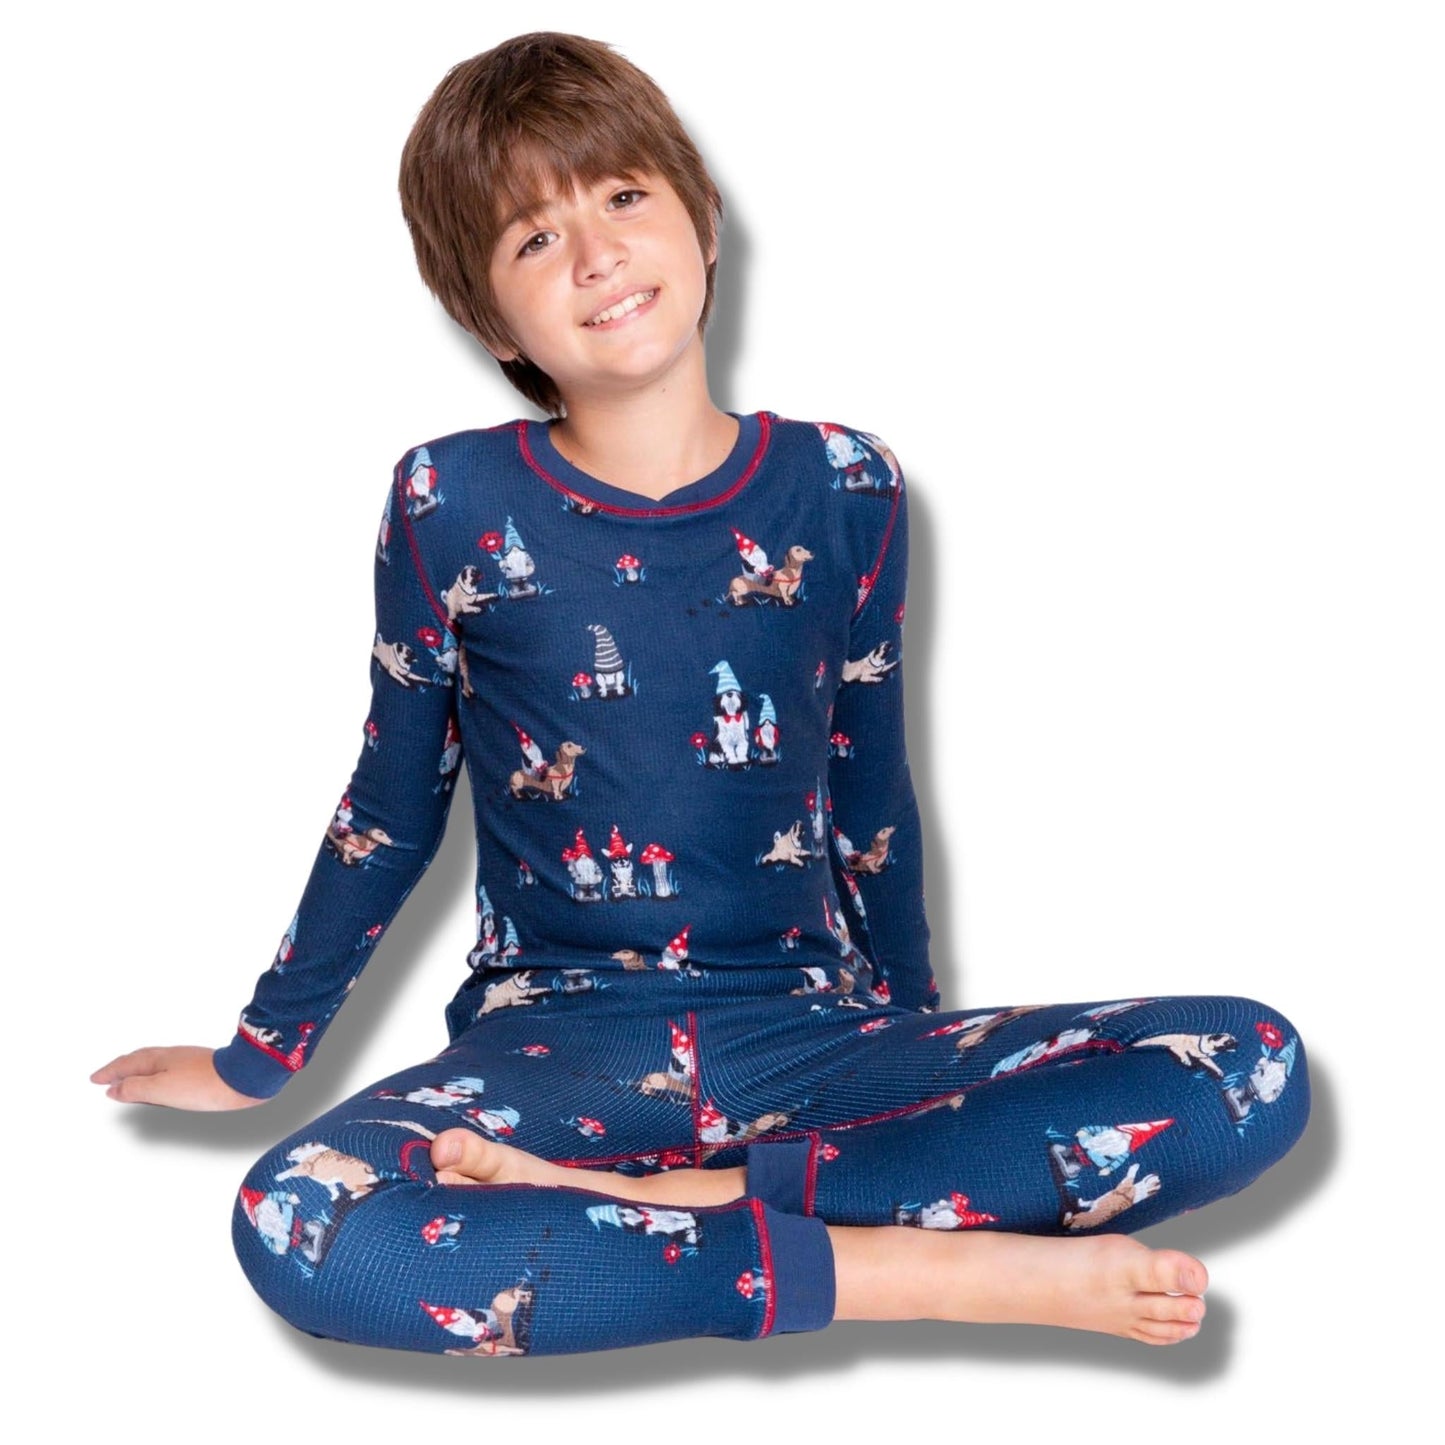 PJ Salvage Navy Gnomies Kids Set - a Spirit Animal - Loungewear $30-$60 $45-$60 10